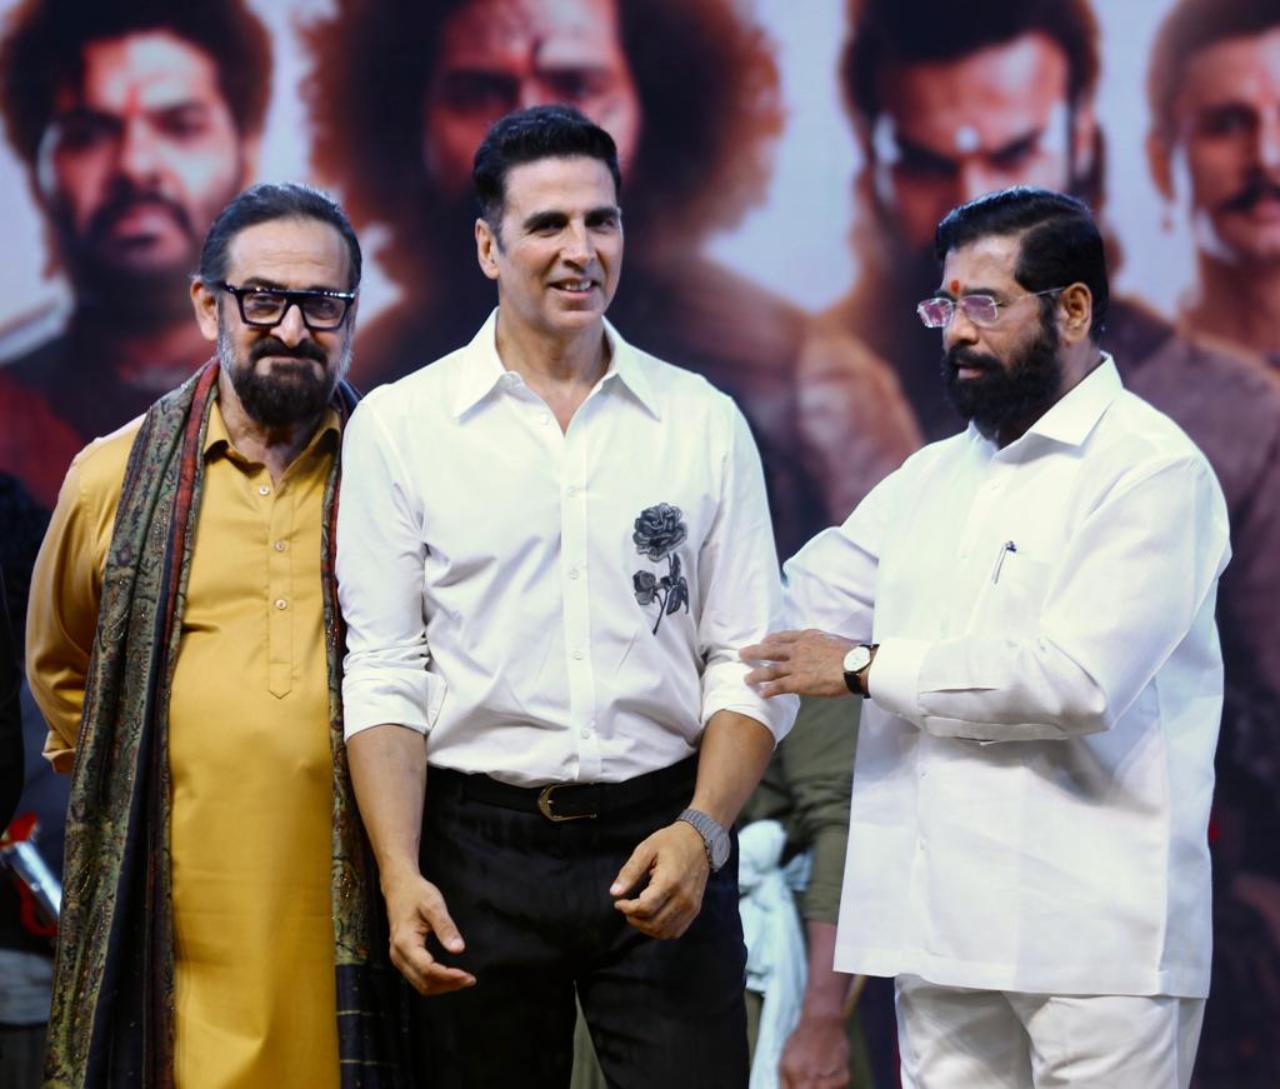 Speaking about the film and team, Maharashtra CM Eknath Shinde said, 